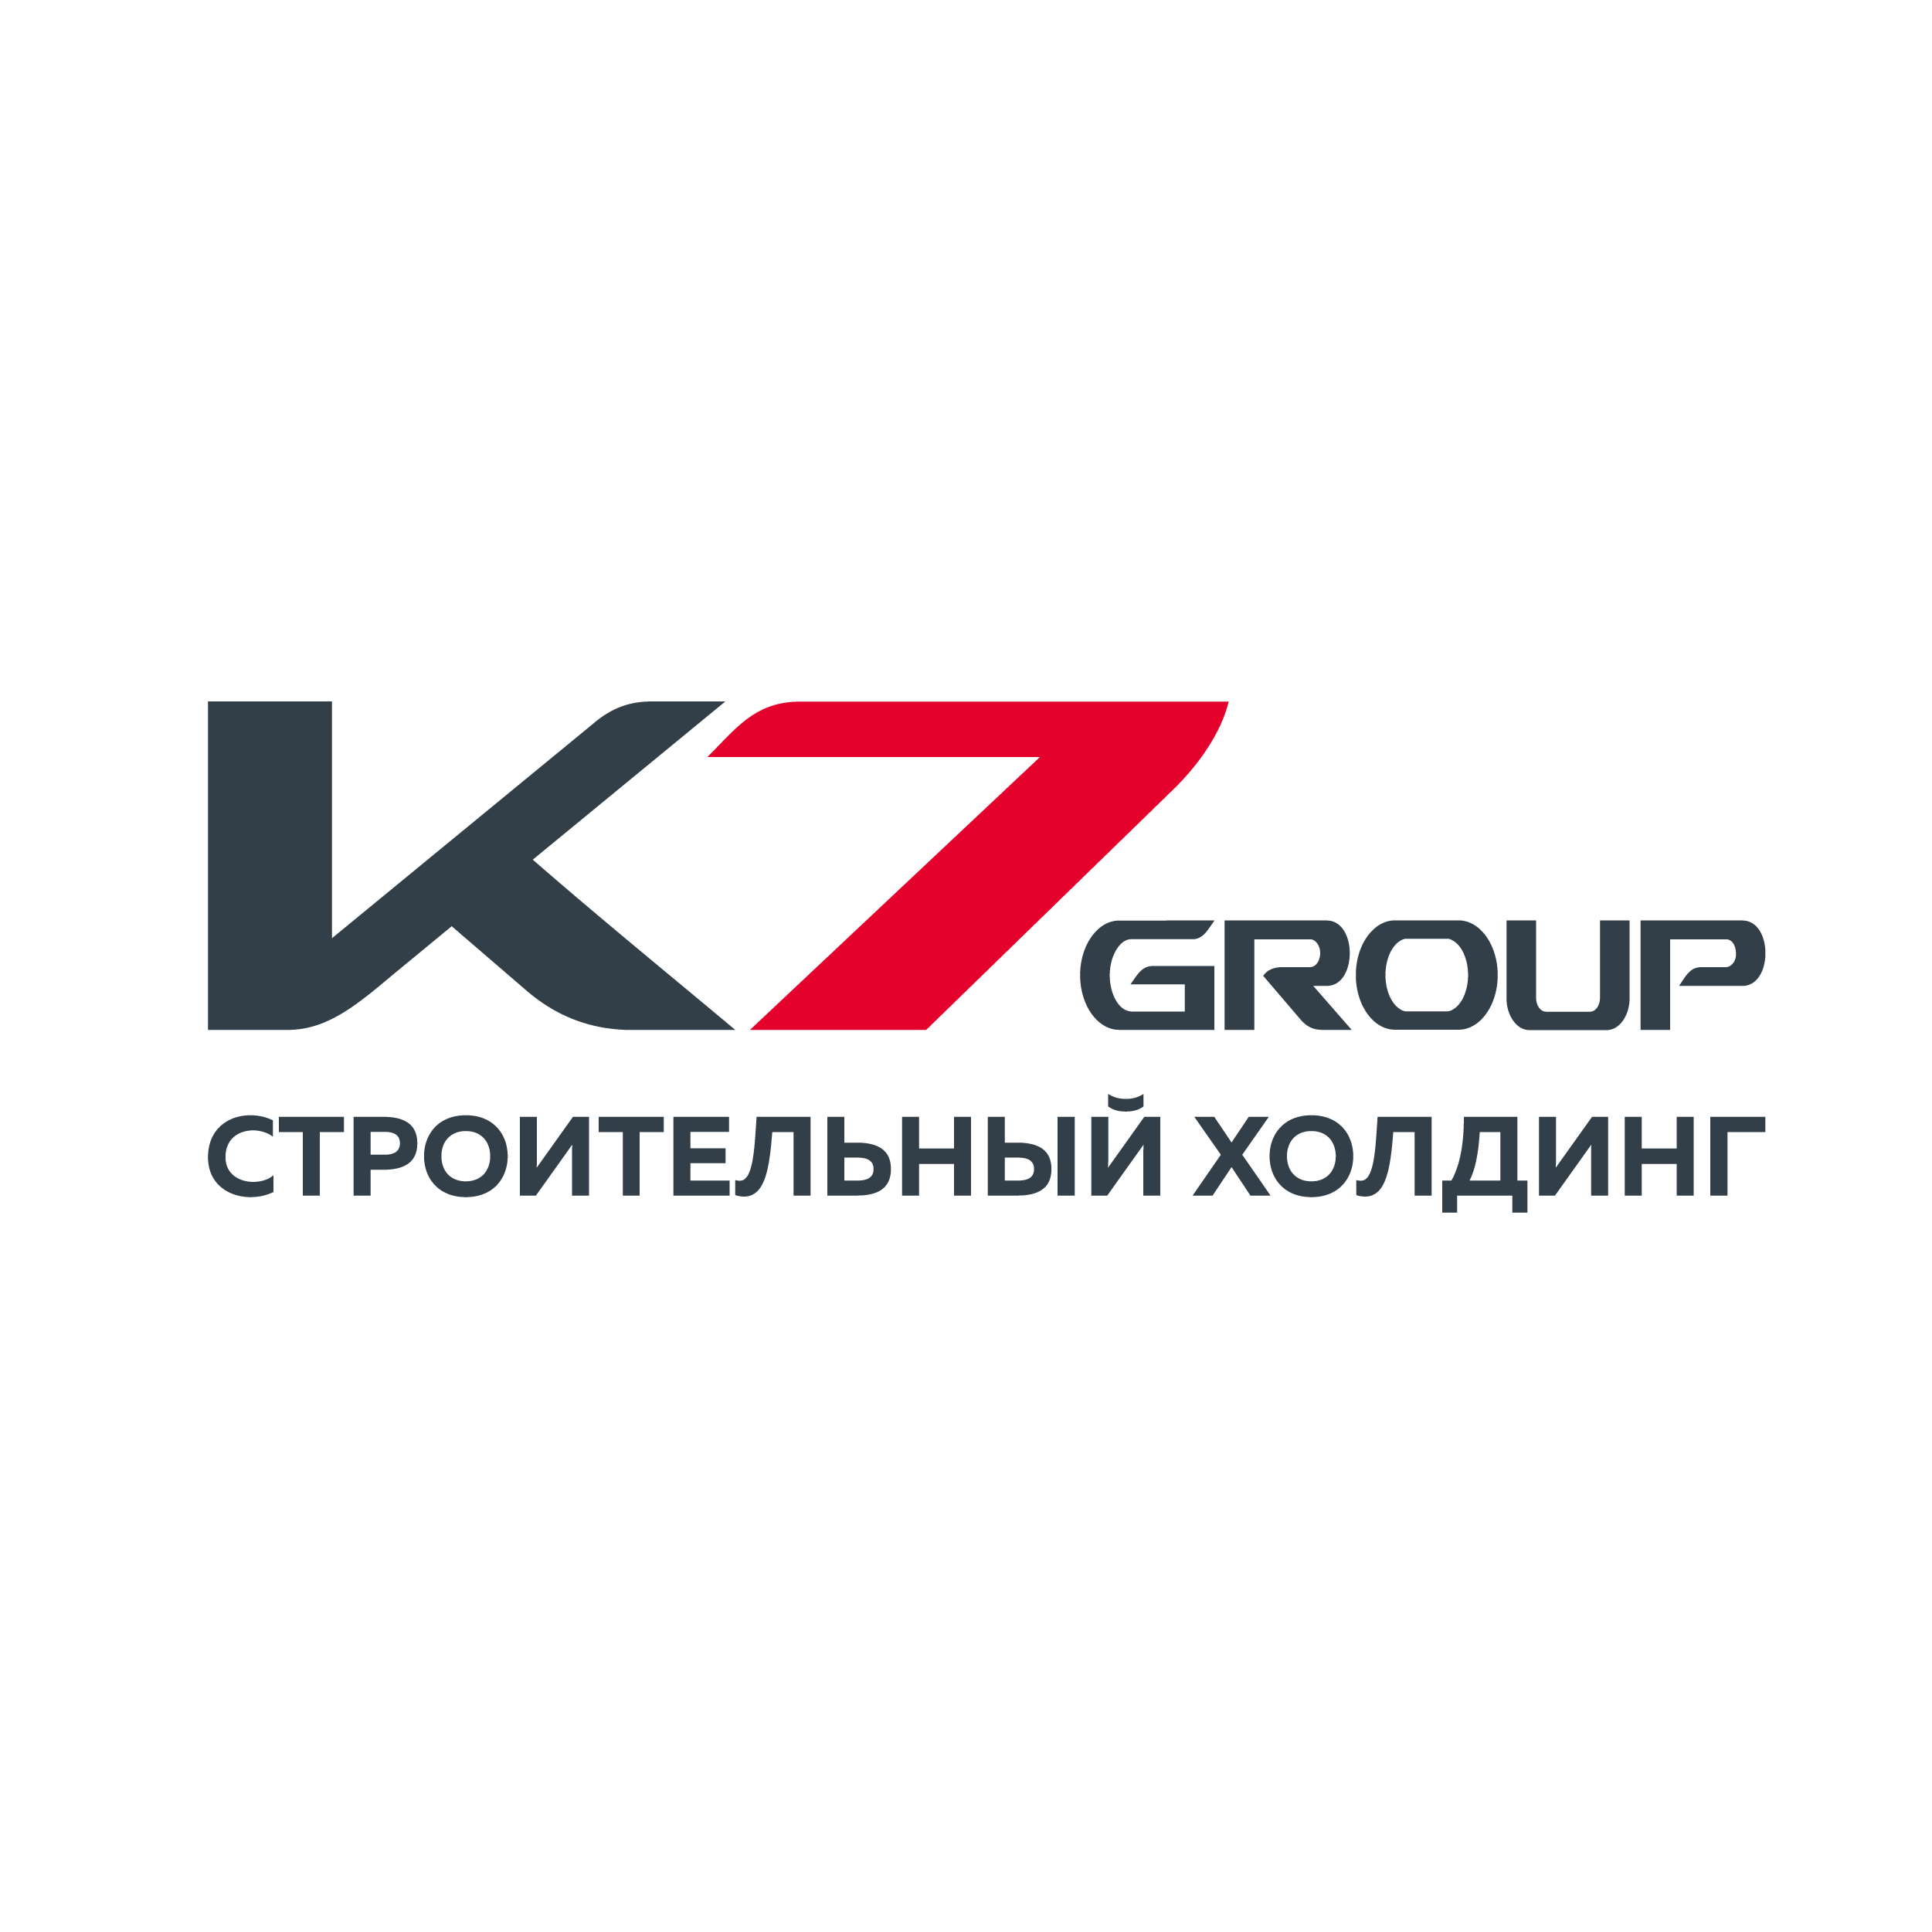 Группа k 7. K7. Строительный Холдинг «SSD Group» Сахалин. R-7 Group logo. 7k7k.